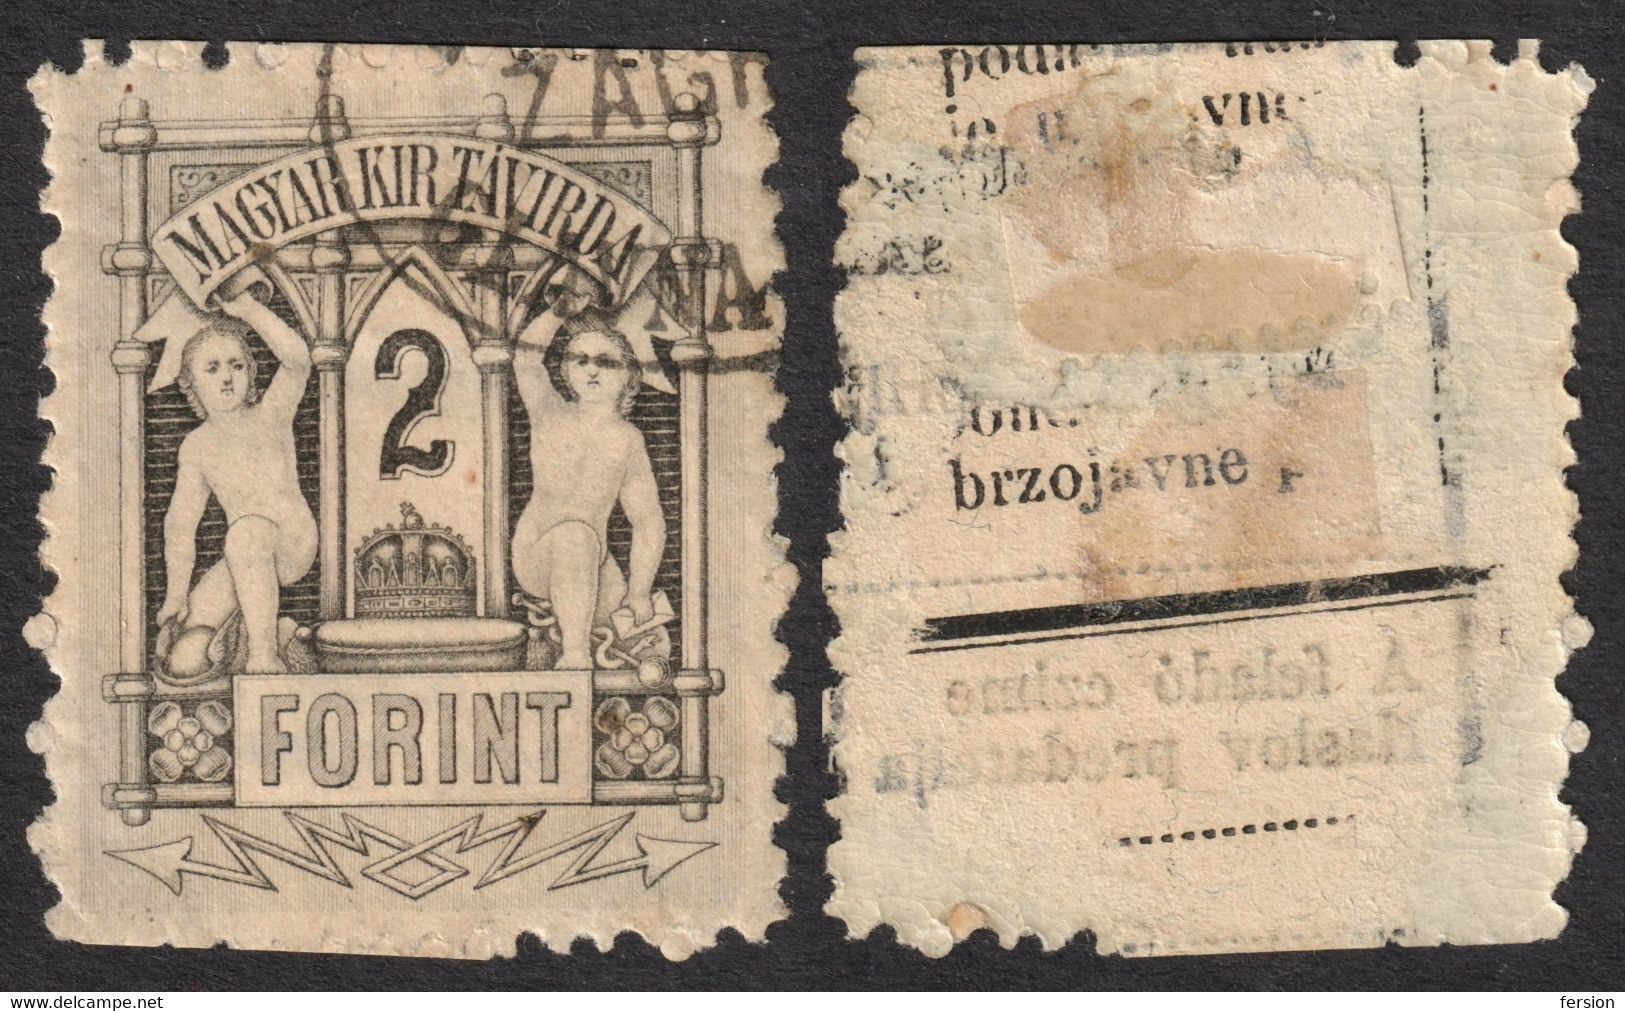 Zagreb Postmark CROATIA - TELEGRAPH Telegram TAX Stamp - 1873 HUNGARY - Copper Print 2 Ft - Used - Telegraphenmarken